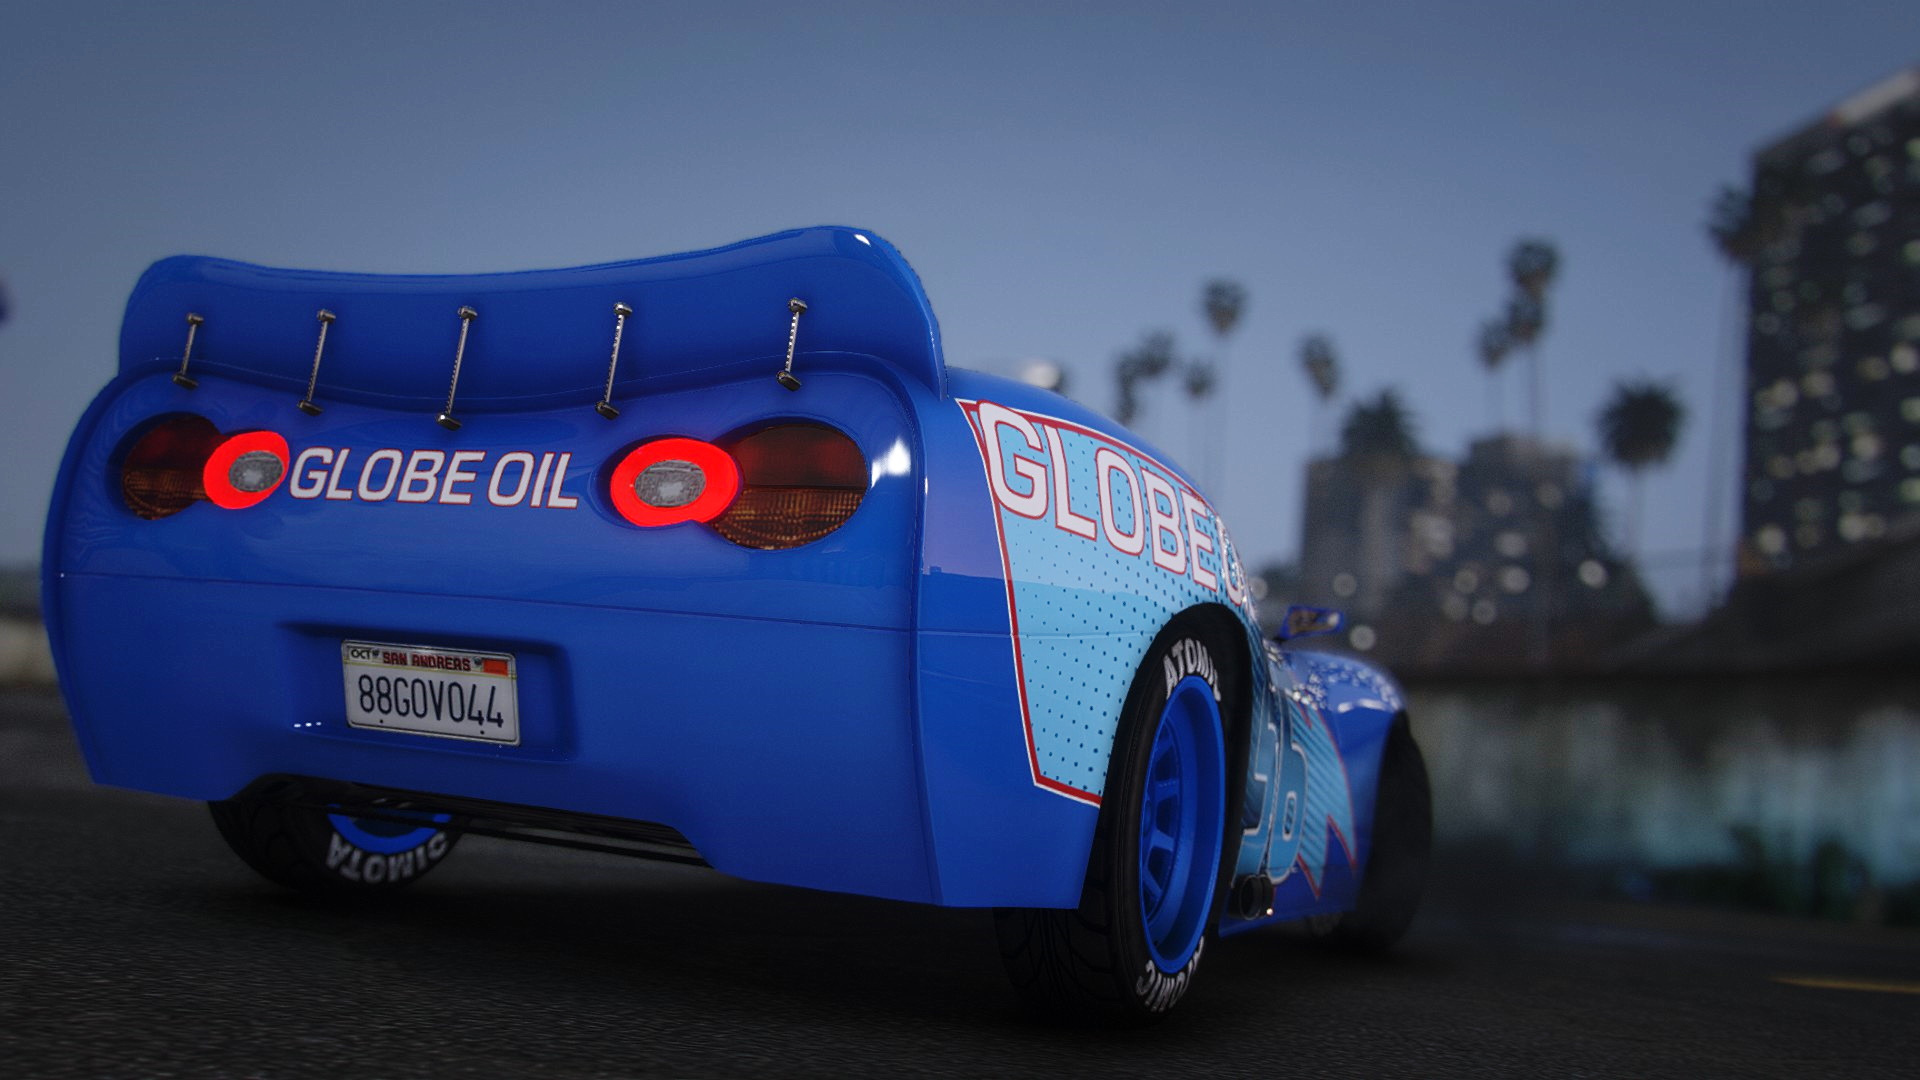 GTA San Andreas Tuned McQueens from Cars Race-o-Rama Mod 